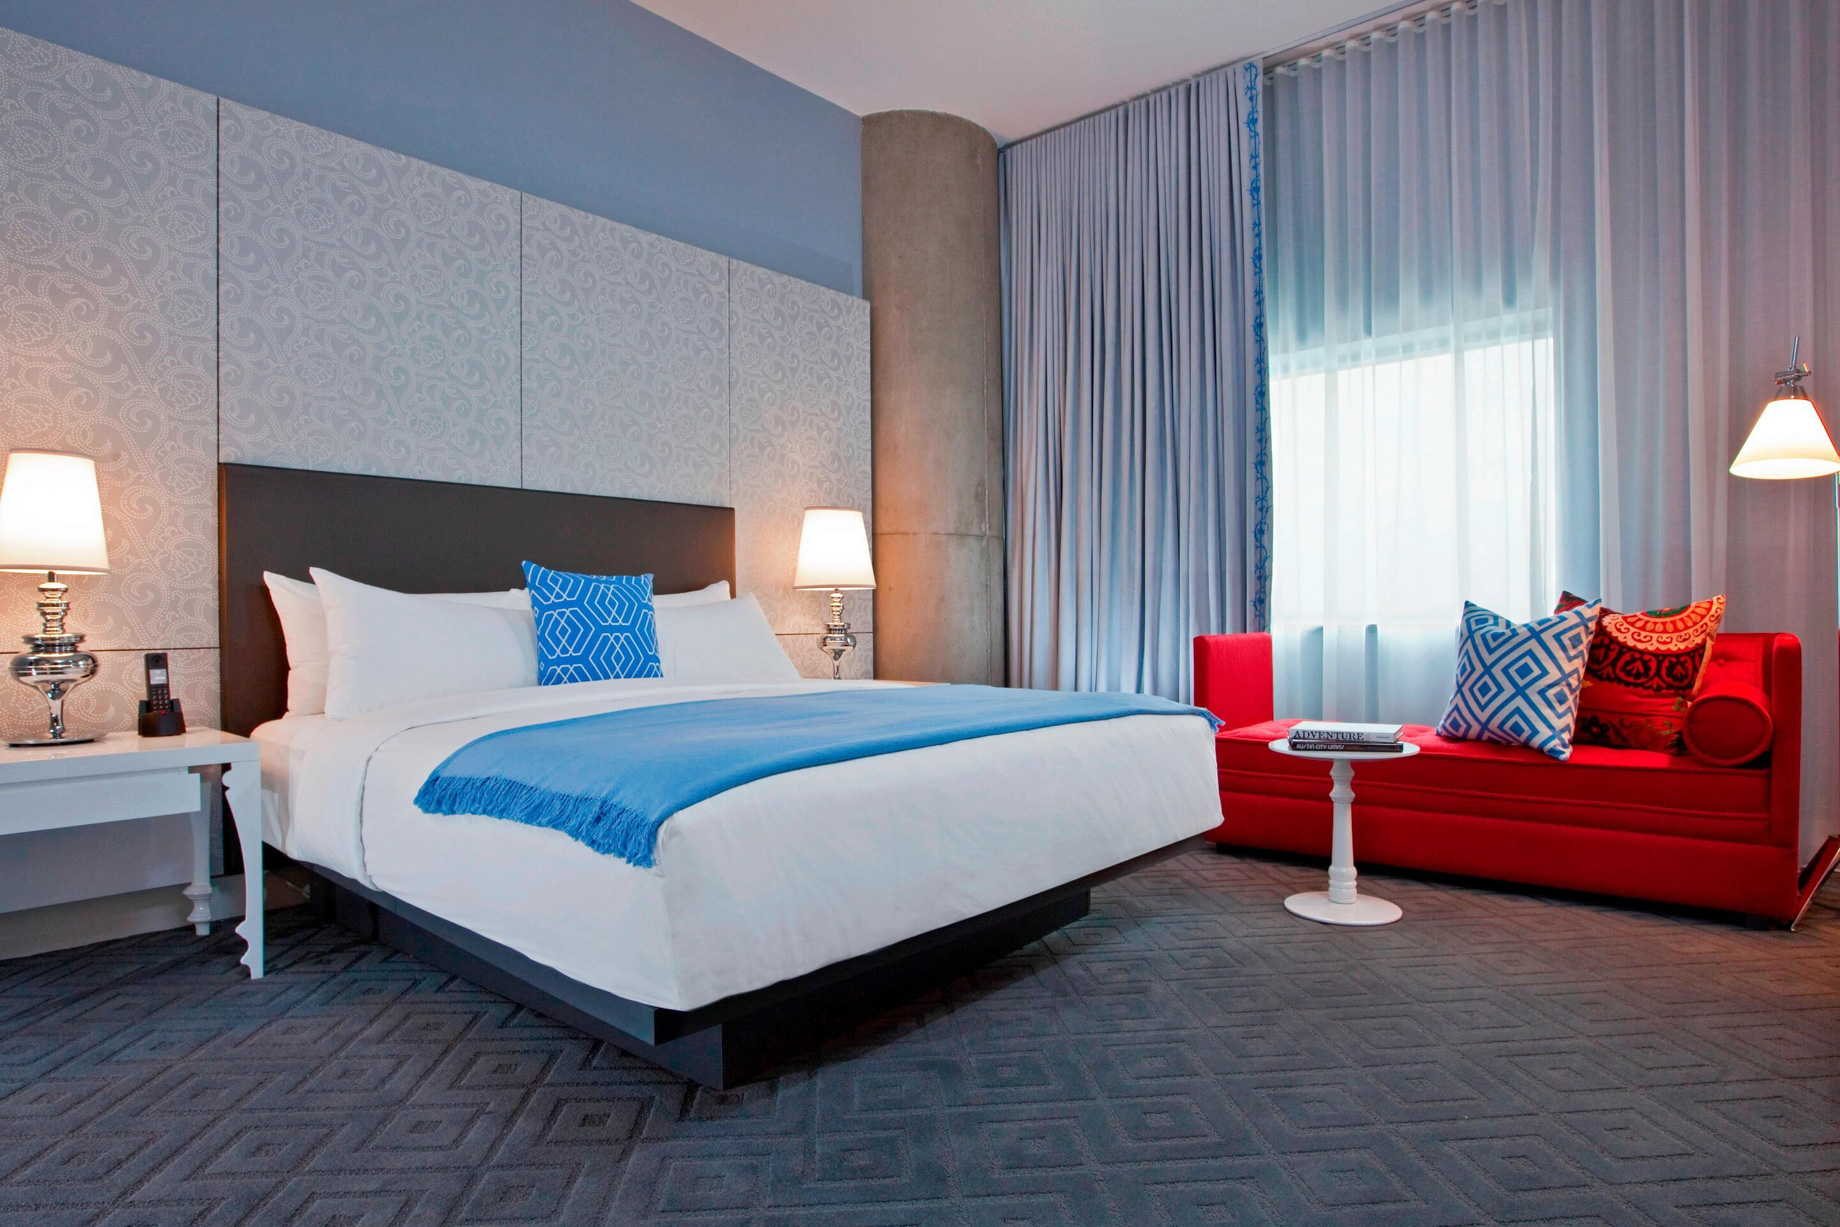 W Austin Hotel - Austin, TX, USA - Fantastic Suite Bed